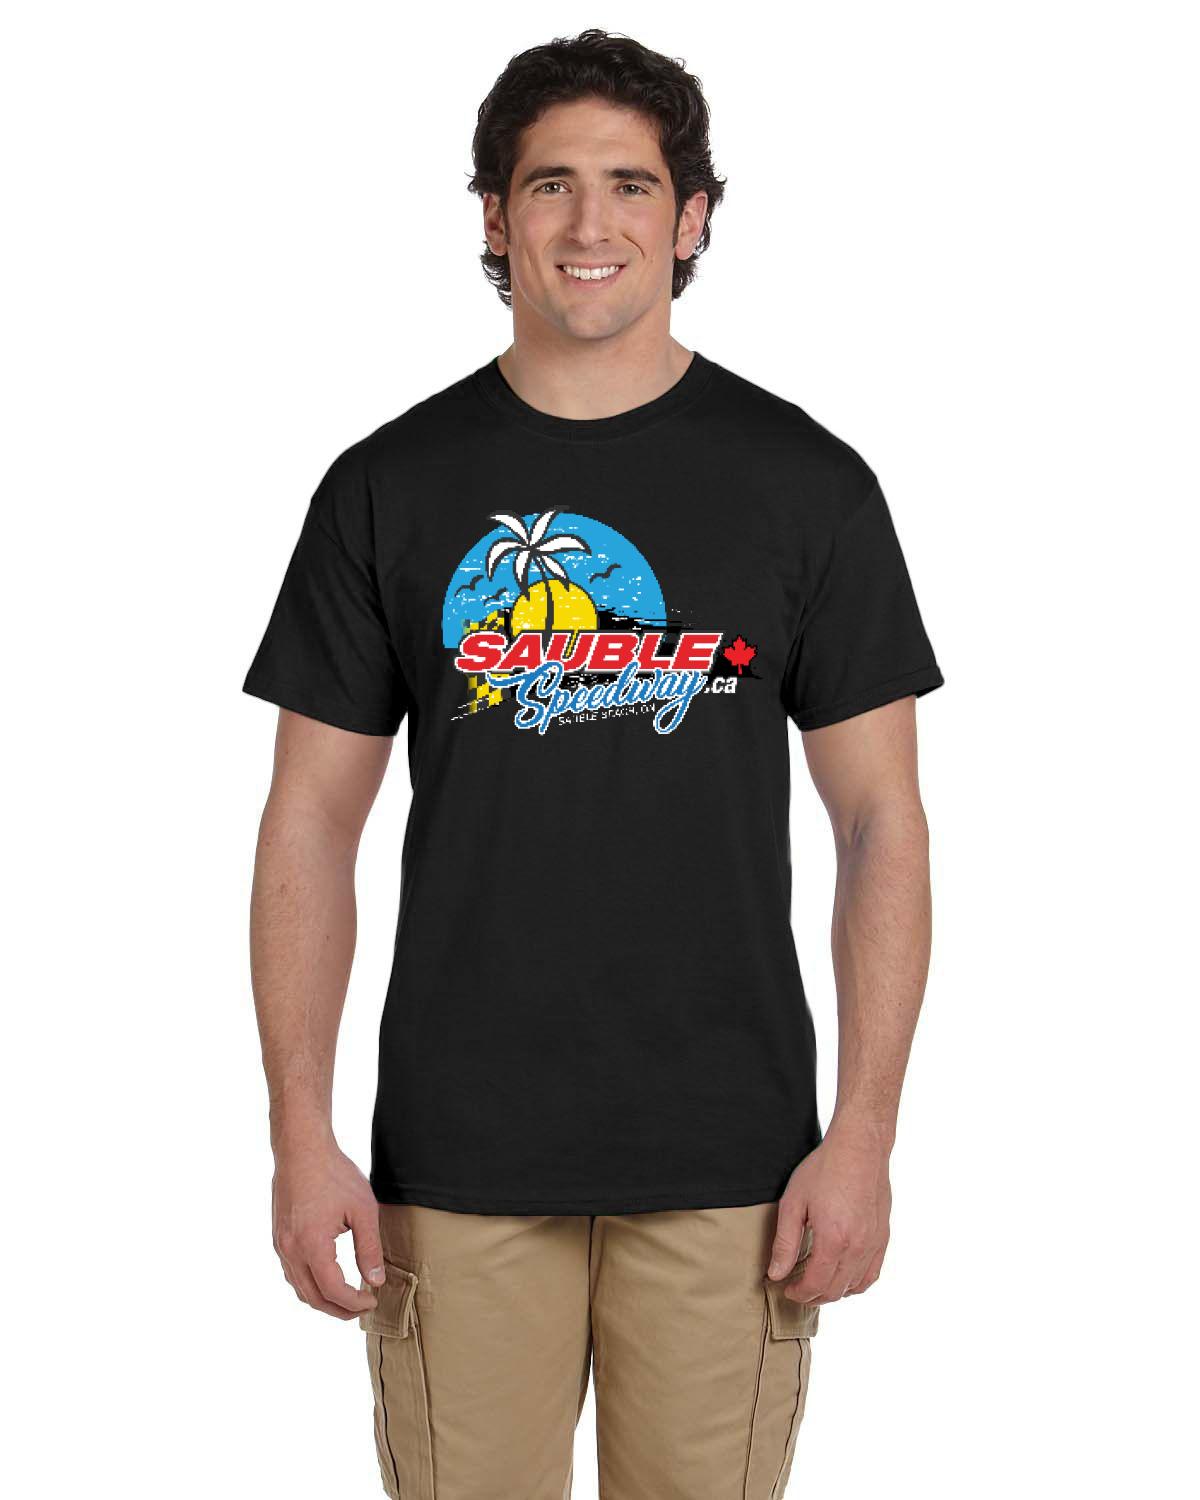 Sauble Speedway Men's T-Shirt